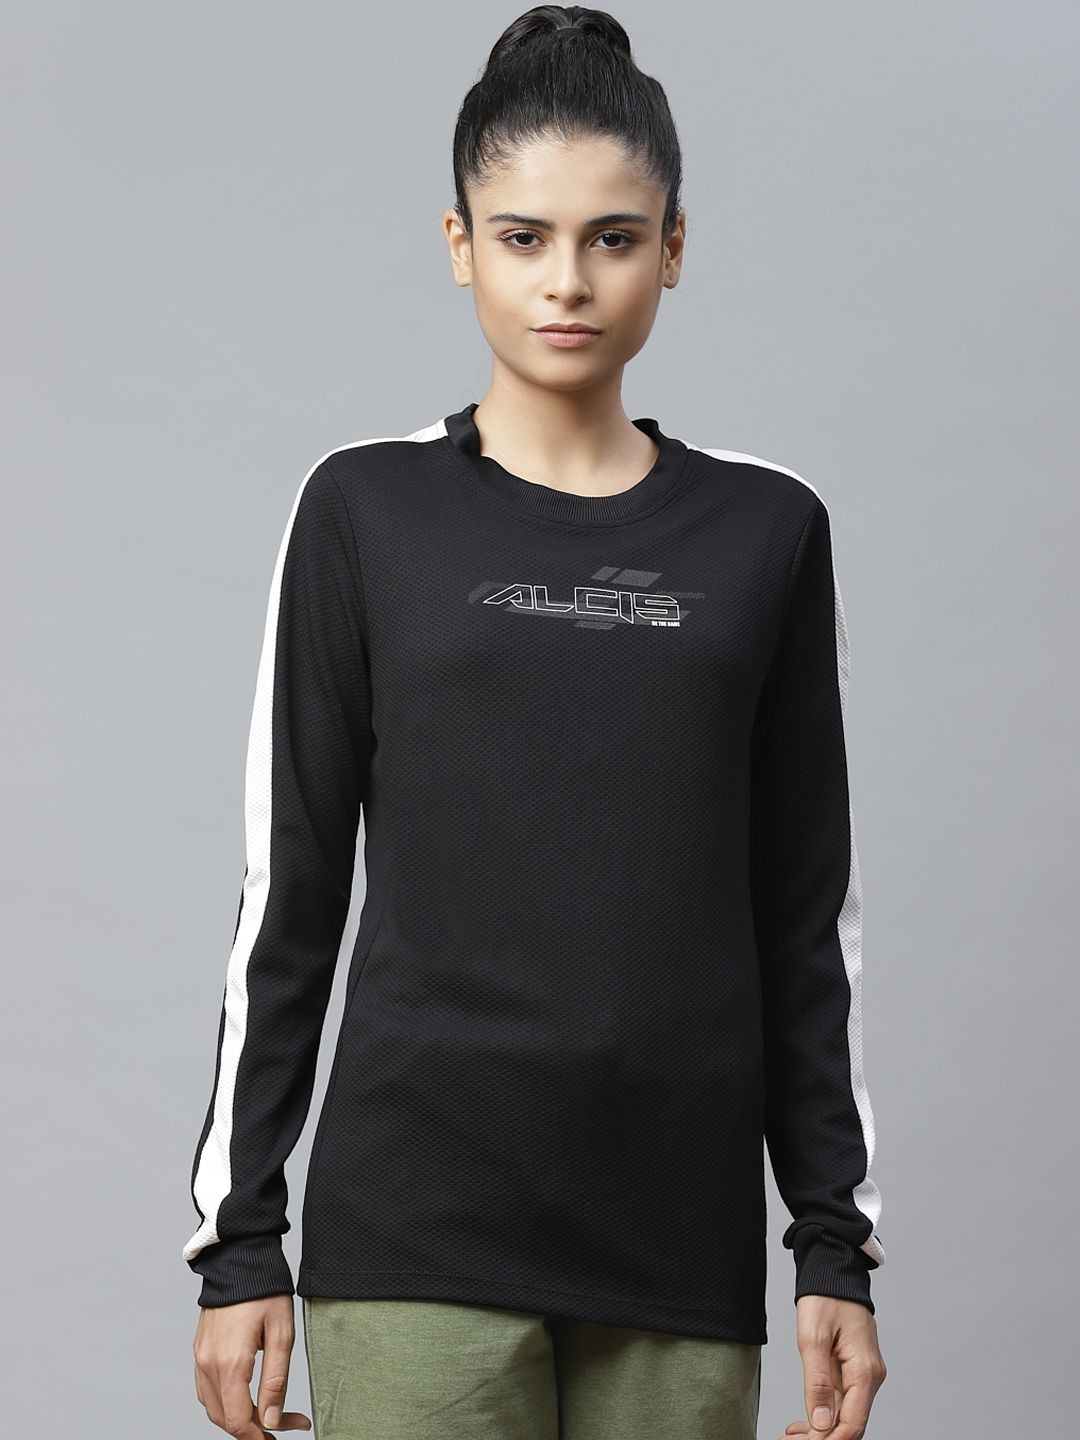 Alcis Women Black Self Design Sweatshirt Price in India